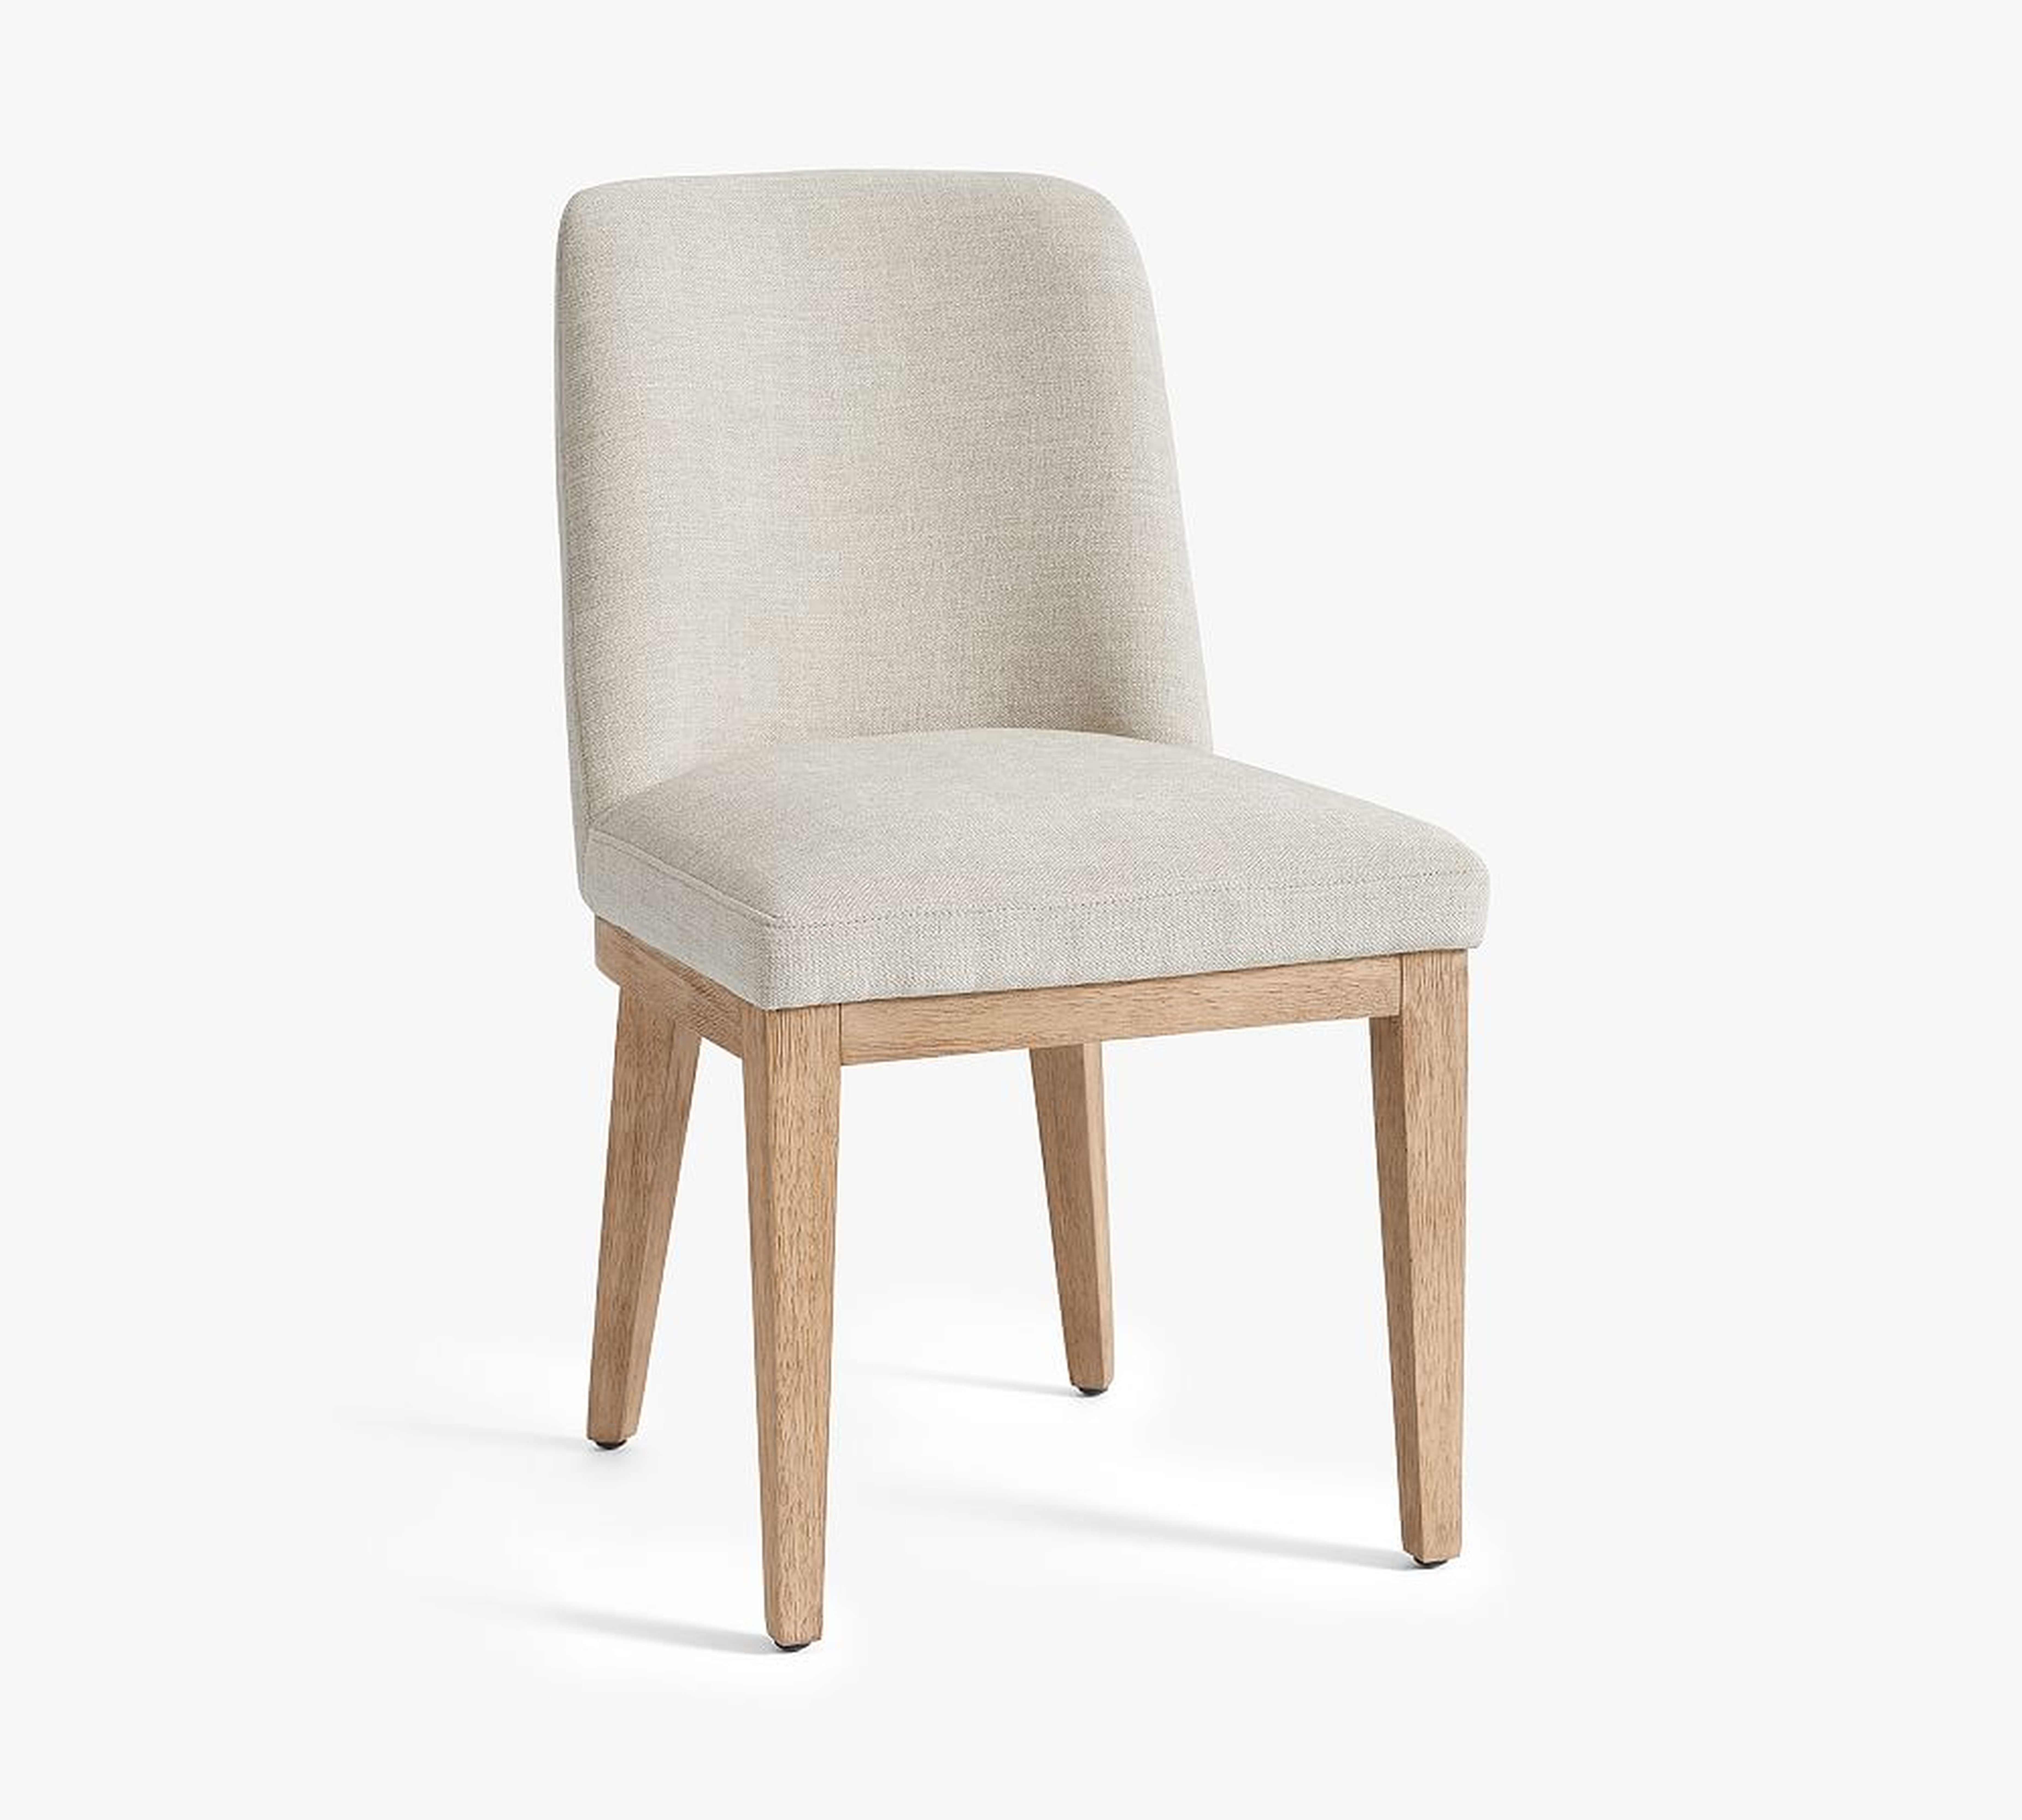 Layton Upholstered Dining Side Chair, Seadrift Leg, Performance Heathered Tweed Pebble - Pottery Barn